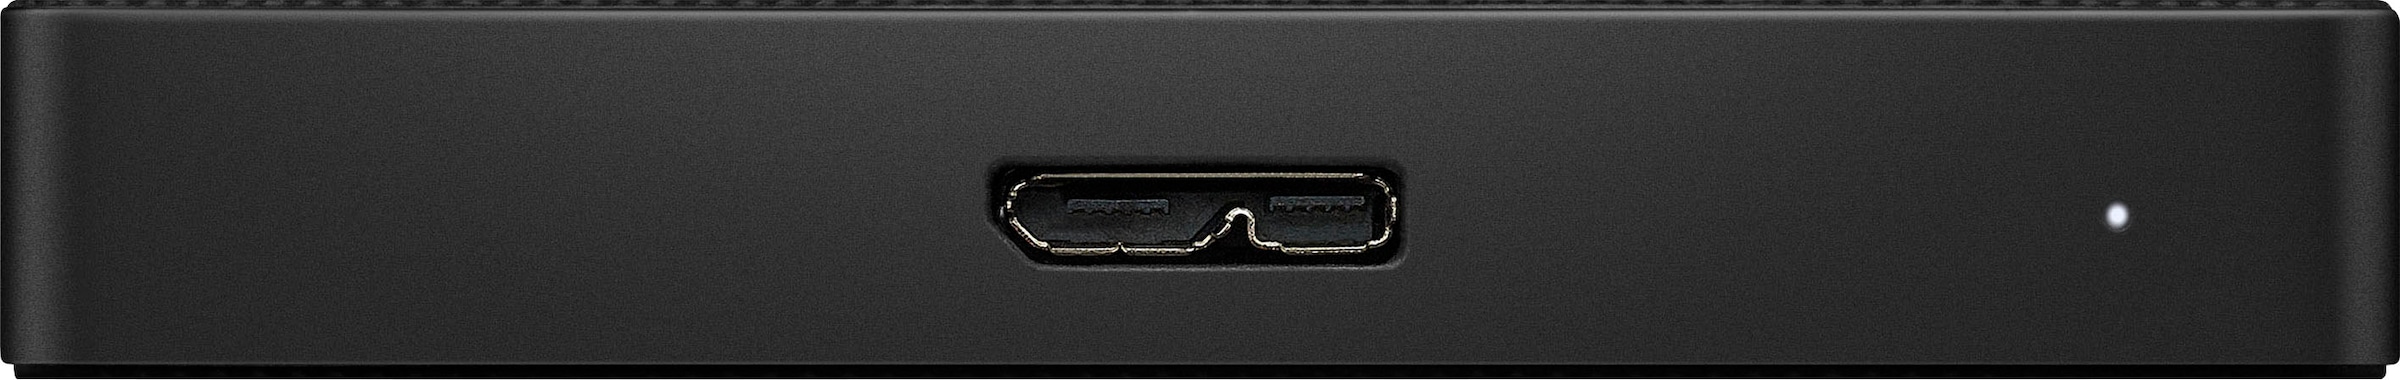 UNIVERSAL HDD-Festplatte 3.0 Jahre Seagate Garantie USB | XXL Anschluss Zoll, 3 »Expansion Portable«, externe 2,5 ➥